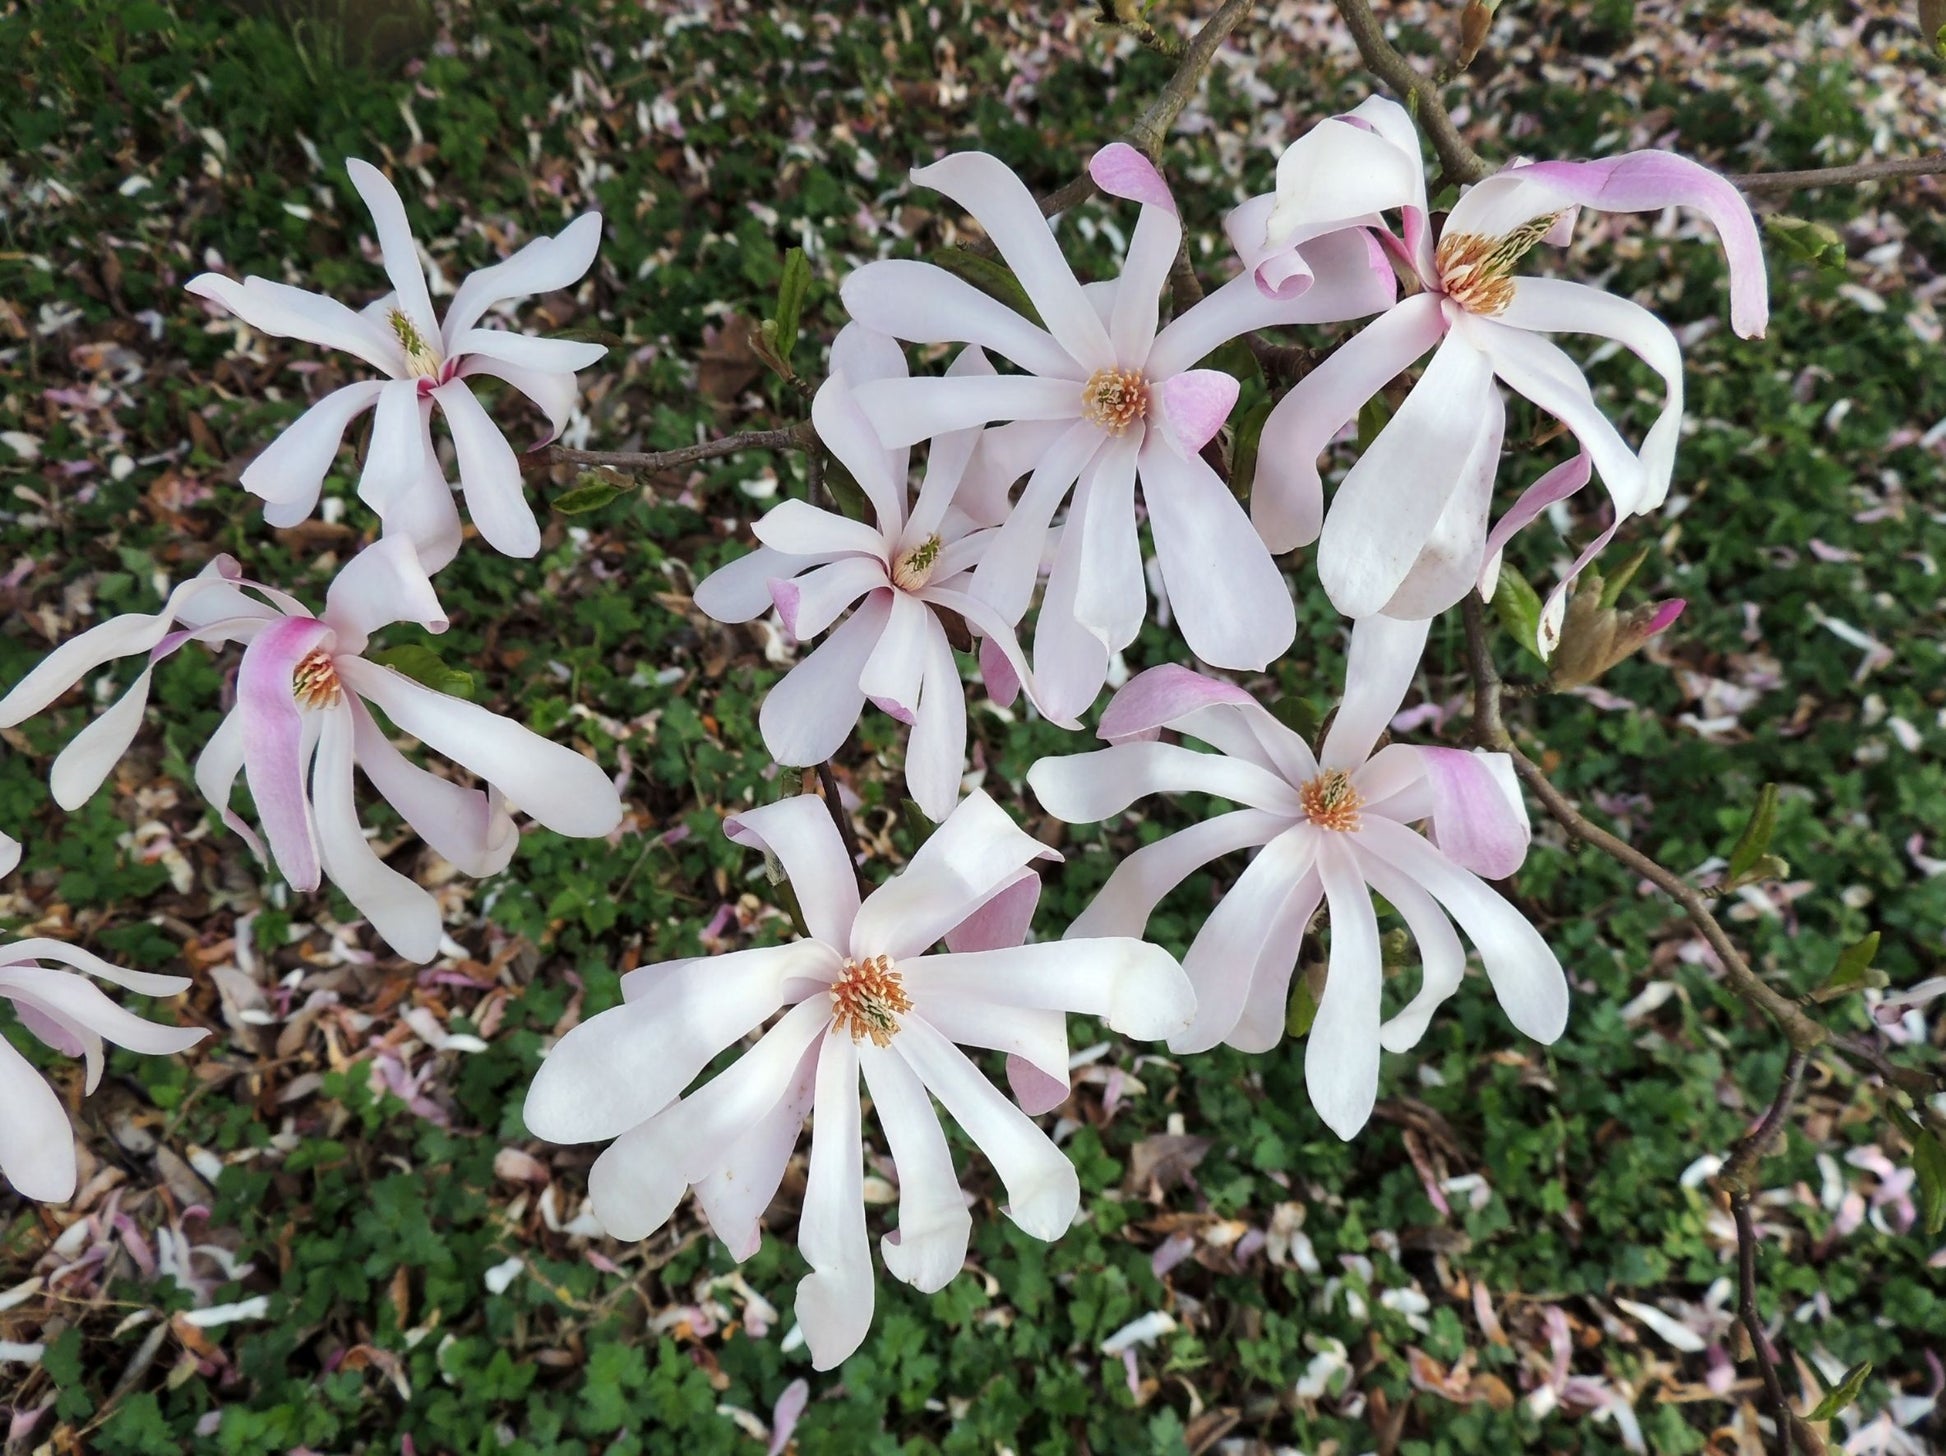 Magnolia Leonard Messel blomster